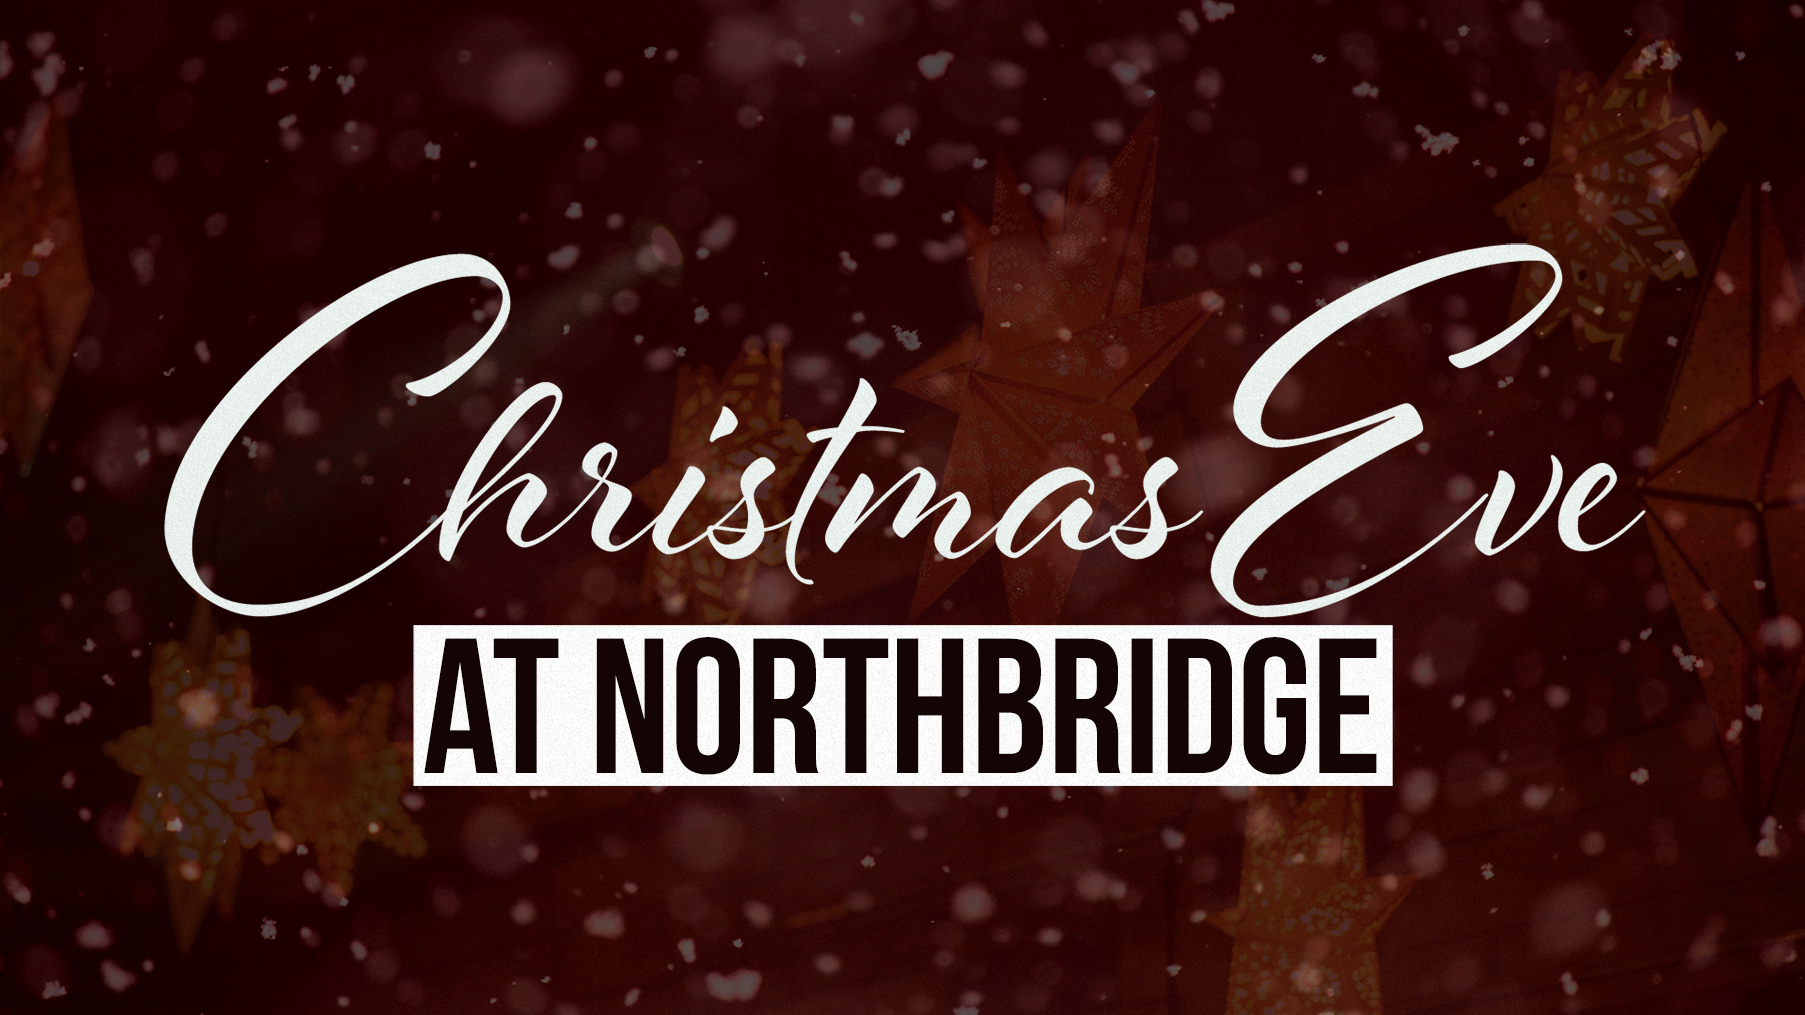 Christmas Eve at NorthBridge